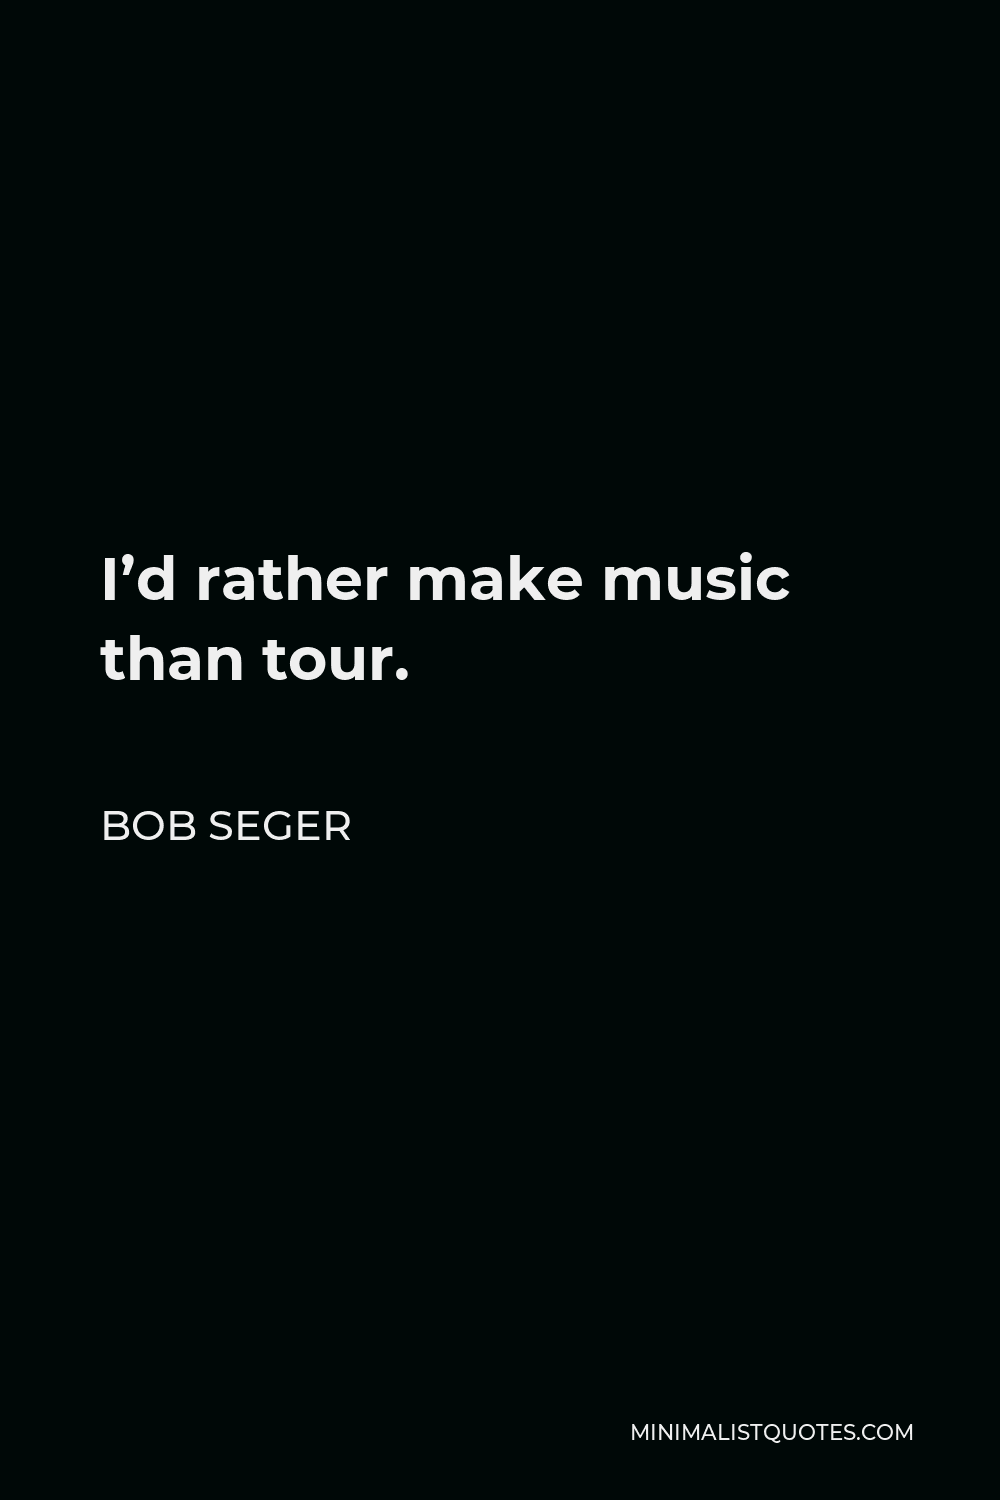 Bob Seger Quote - I’d rather make music than tour.